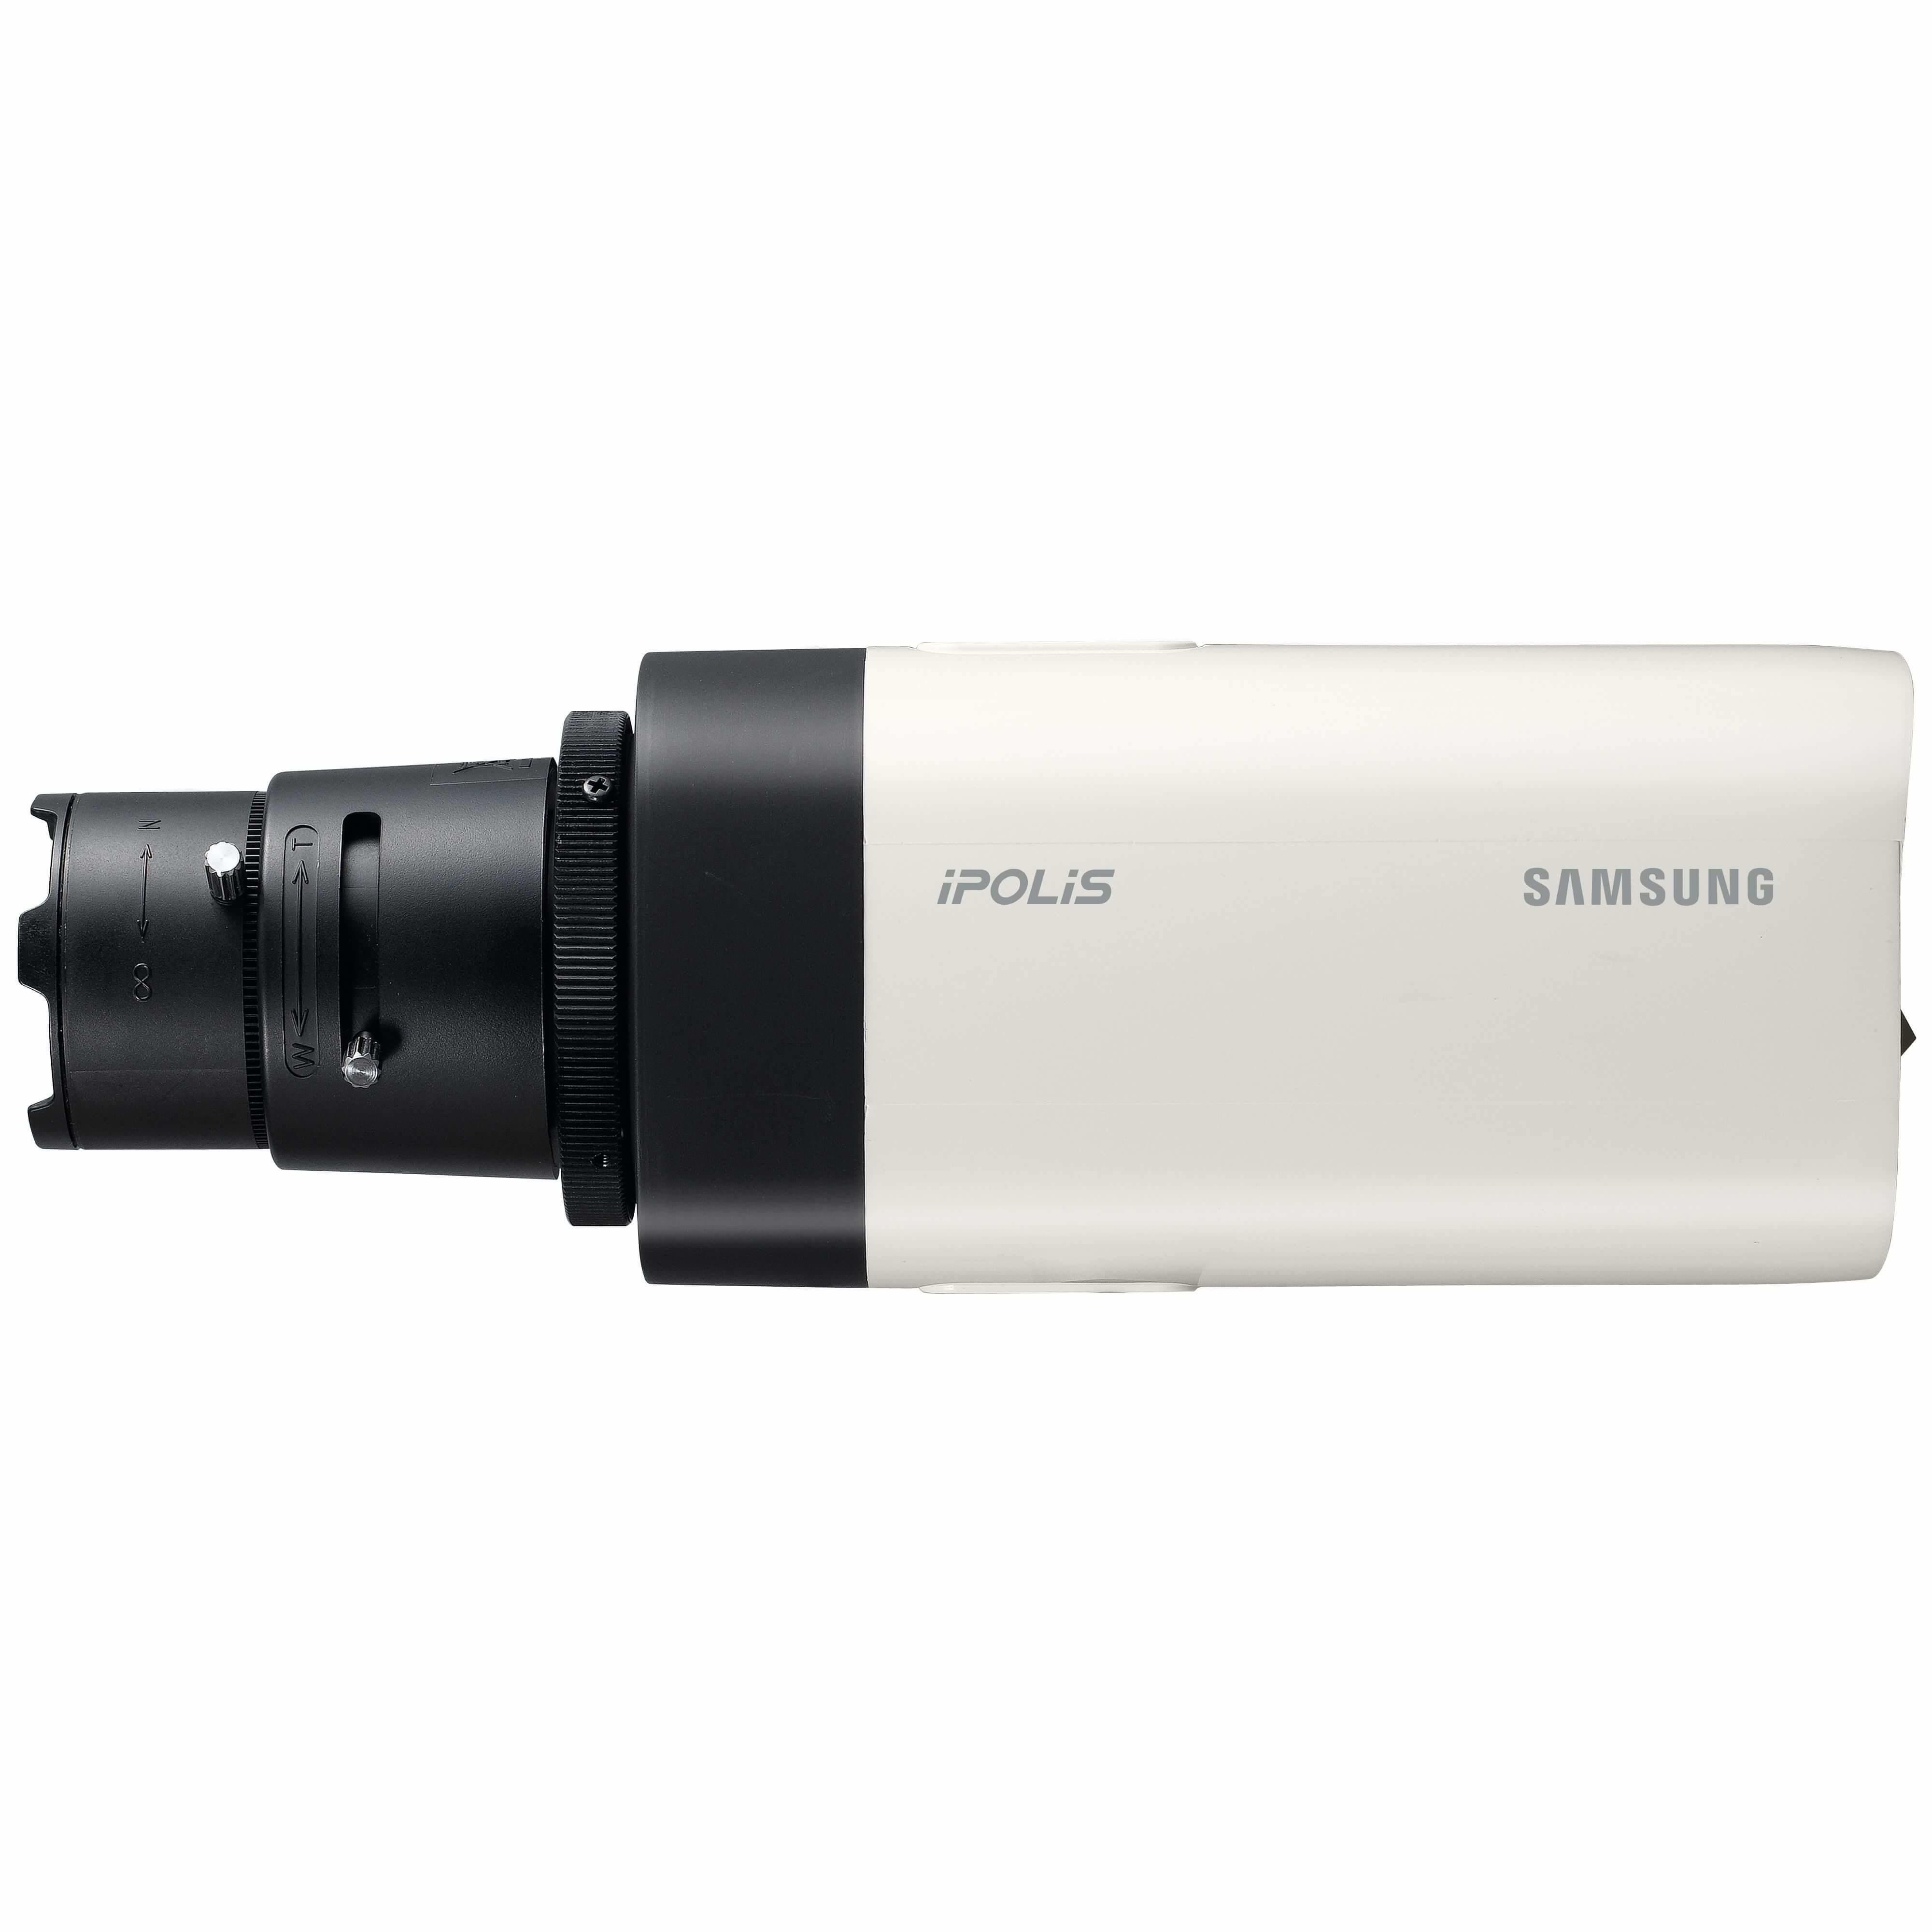 Samsung SNB-6003 Box Kamera